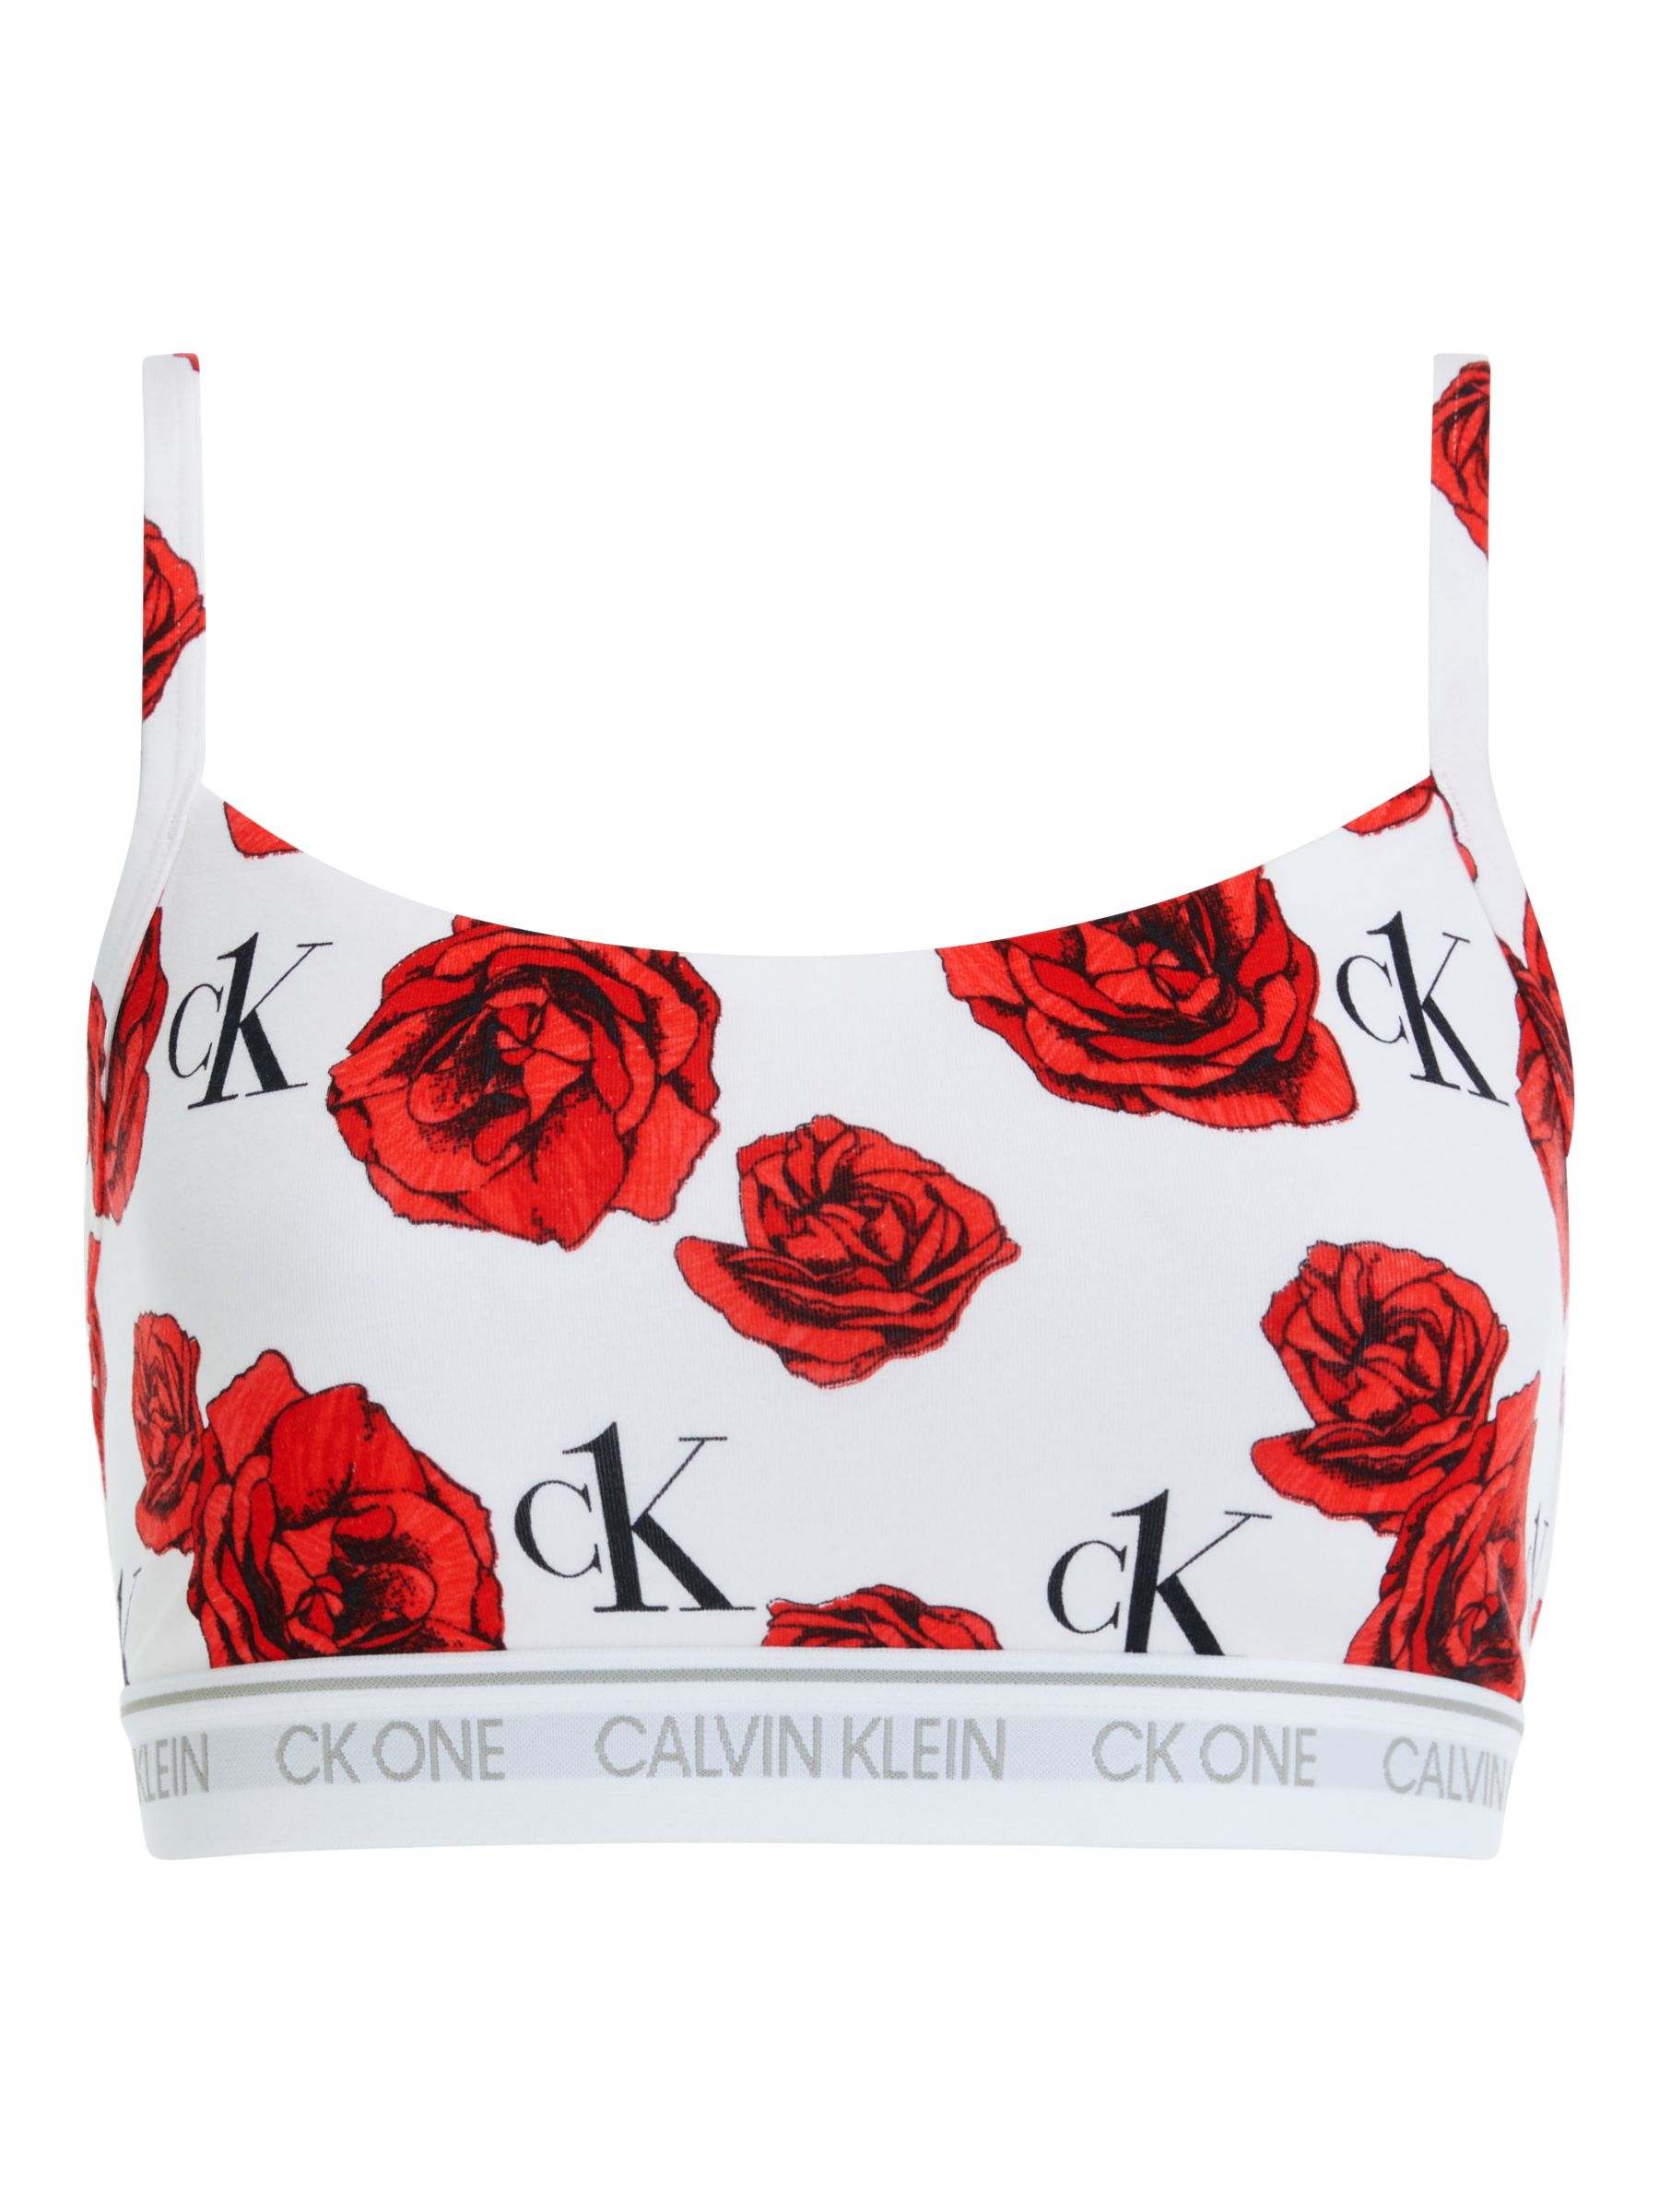 Calvin Klein Underwear CK One Bralette, Charming Roses at John Lewis